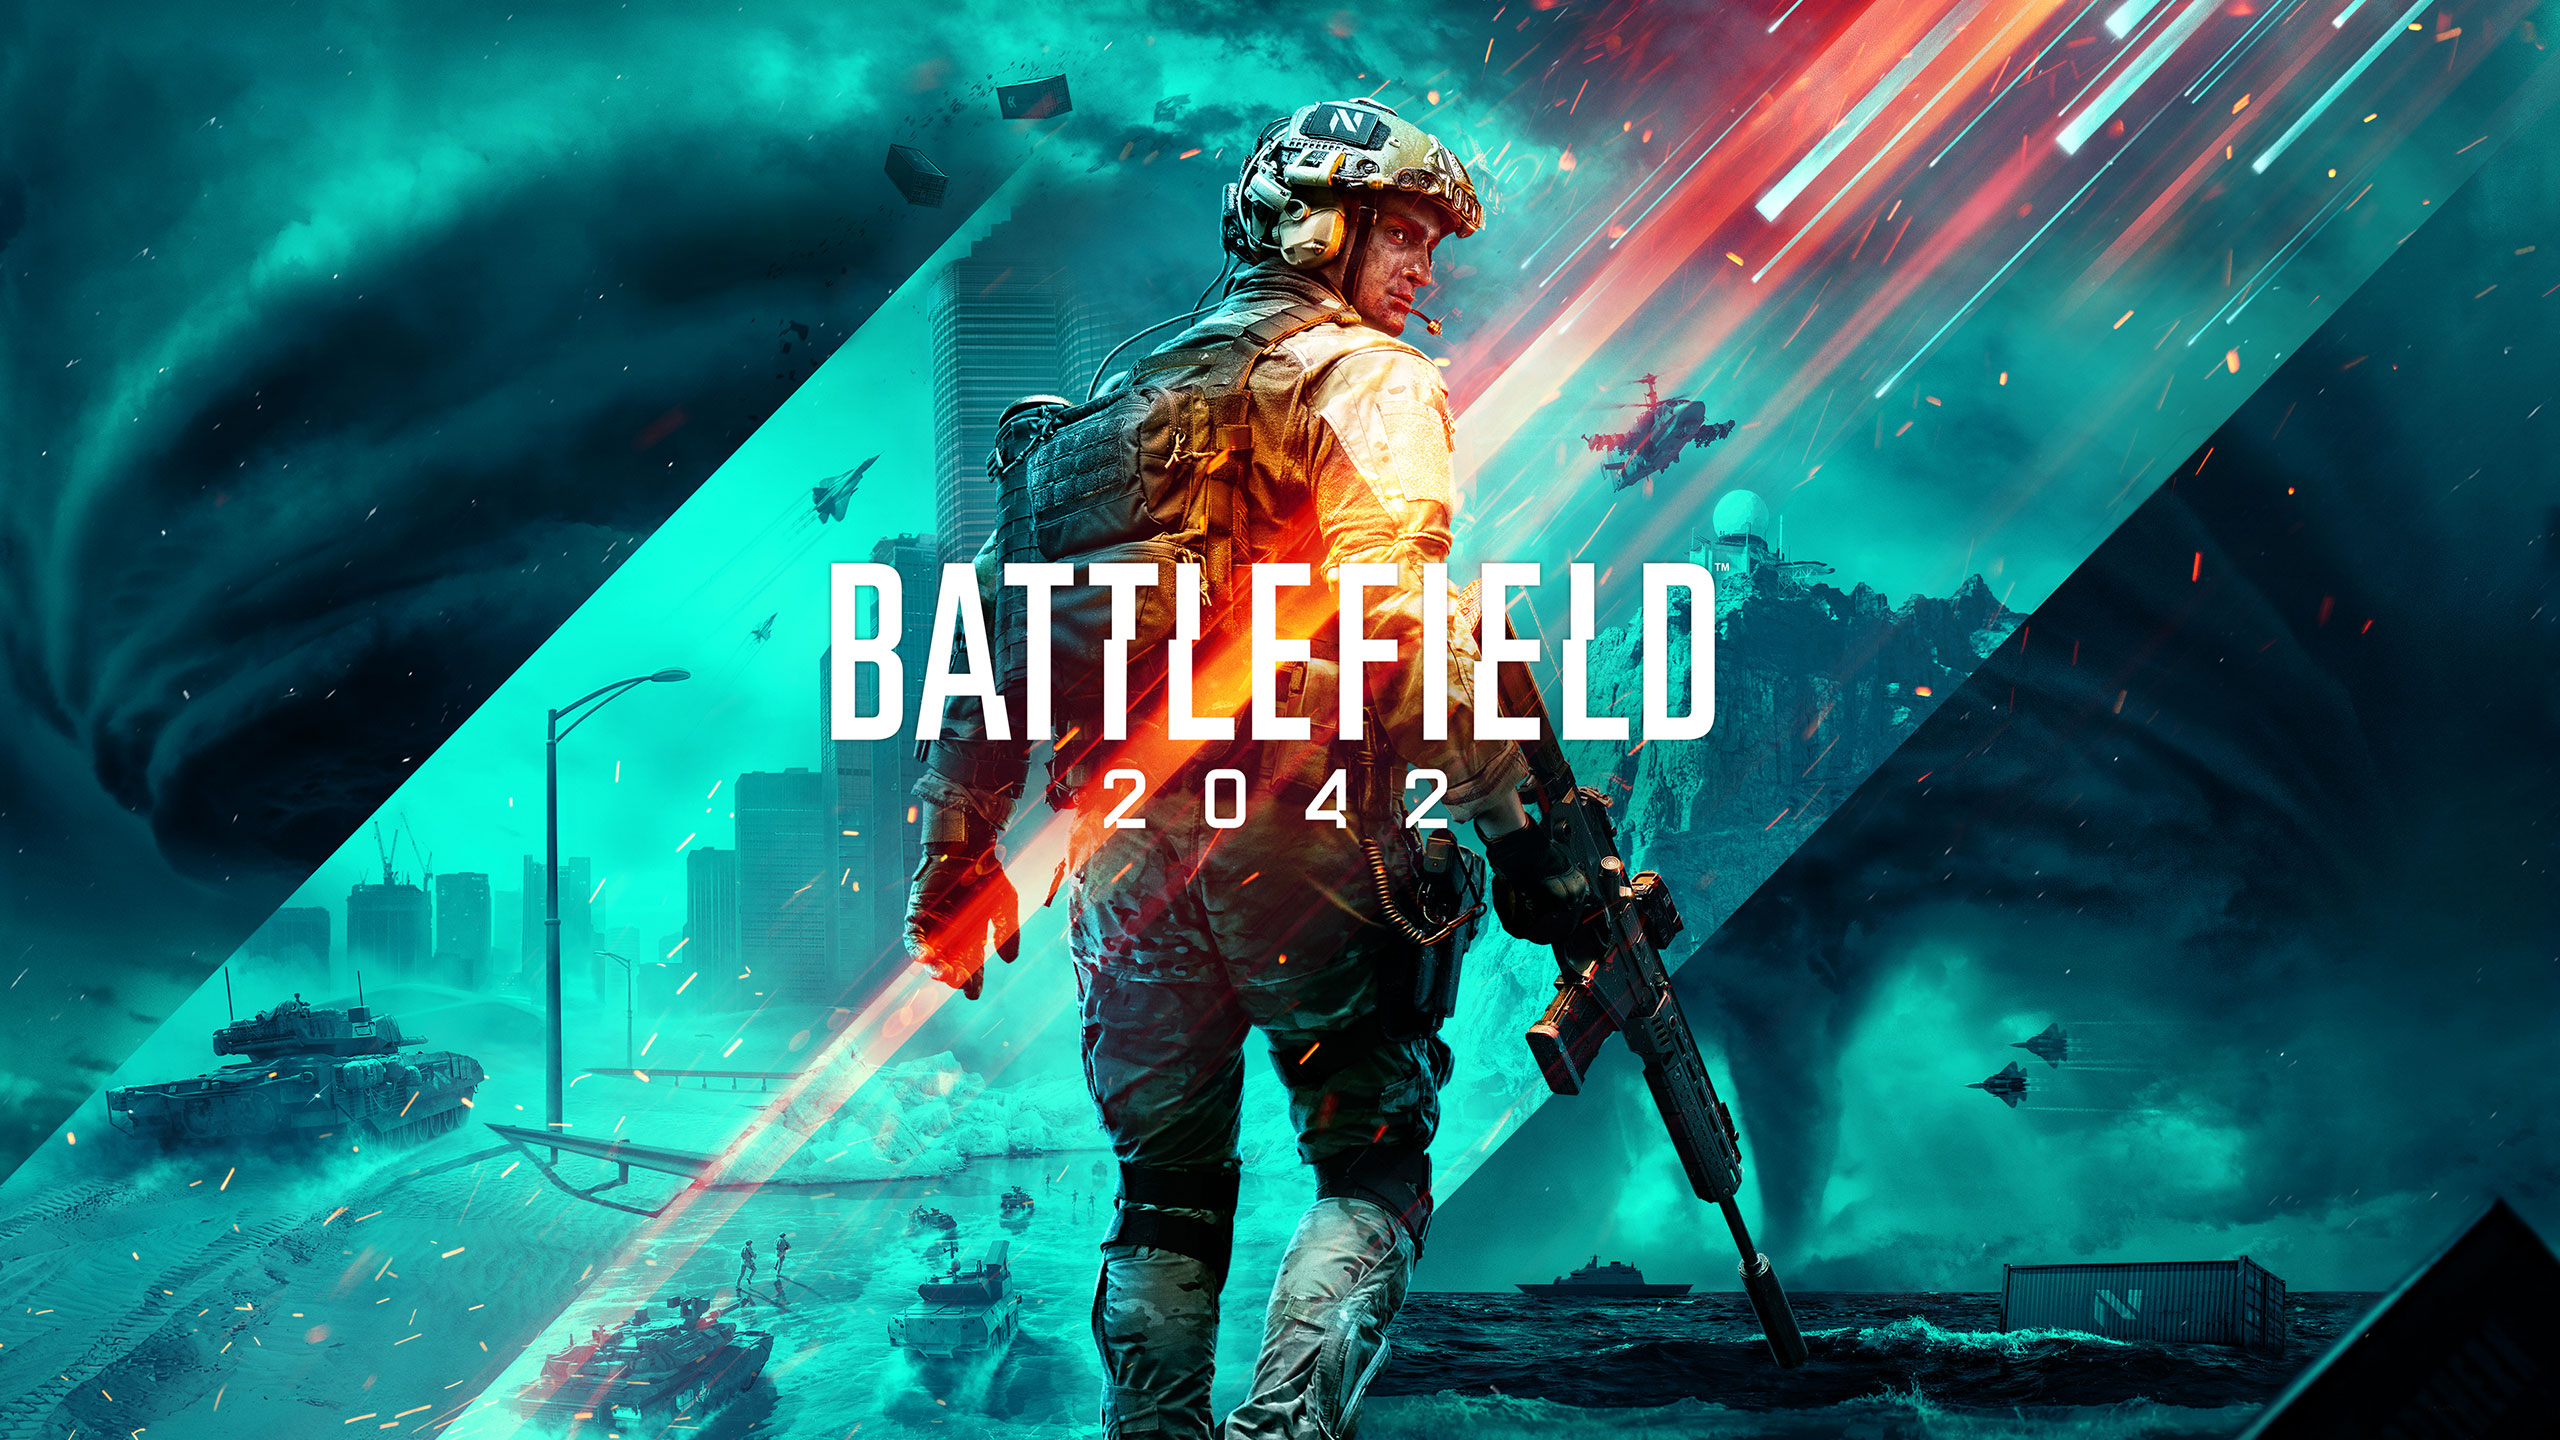 Battlefield 2042 เตรียมเปิดให้เล่น Open Beta ในวันที่ 6 - 9 ตุลาคมนี้ พร้อมทั้งเปิดให้ Preload ได้แล้วในตอนนี้